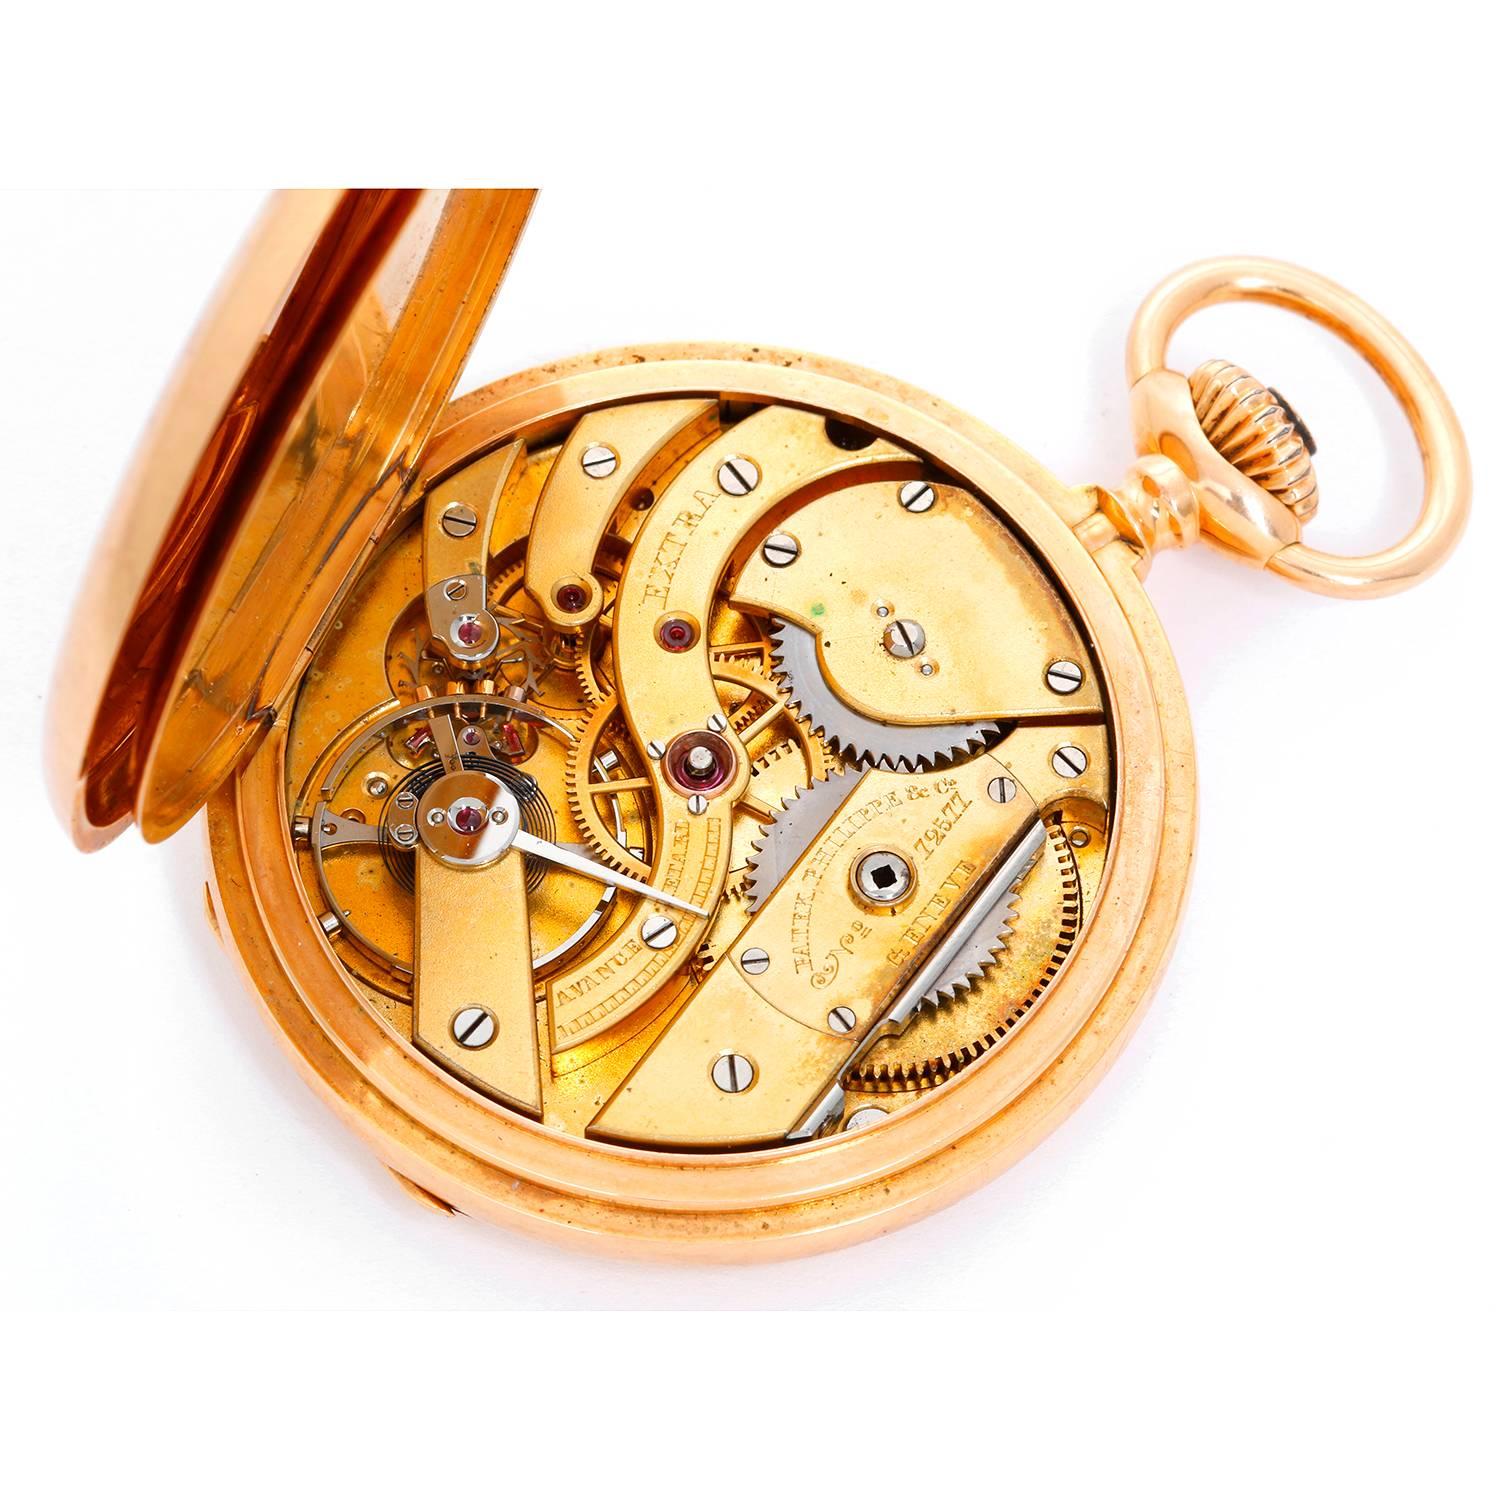 Patek Philippe & Co. Hunter Case Pocket Watch -  Manual. 18K yellow gold, case # 201331. Movement marked 